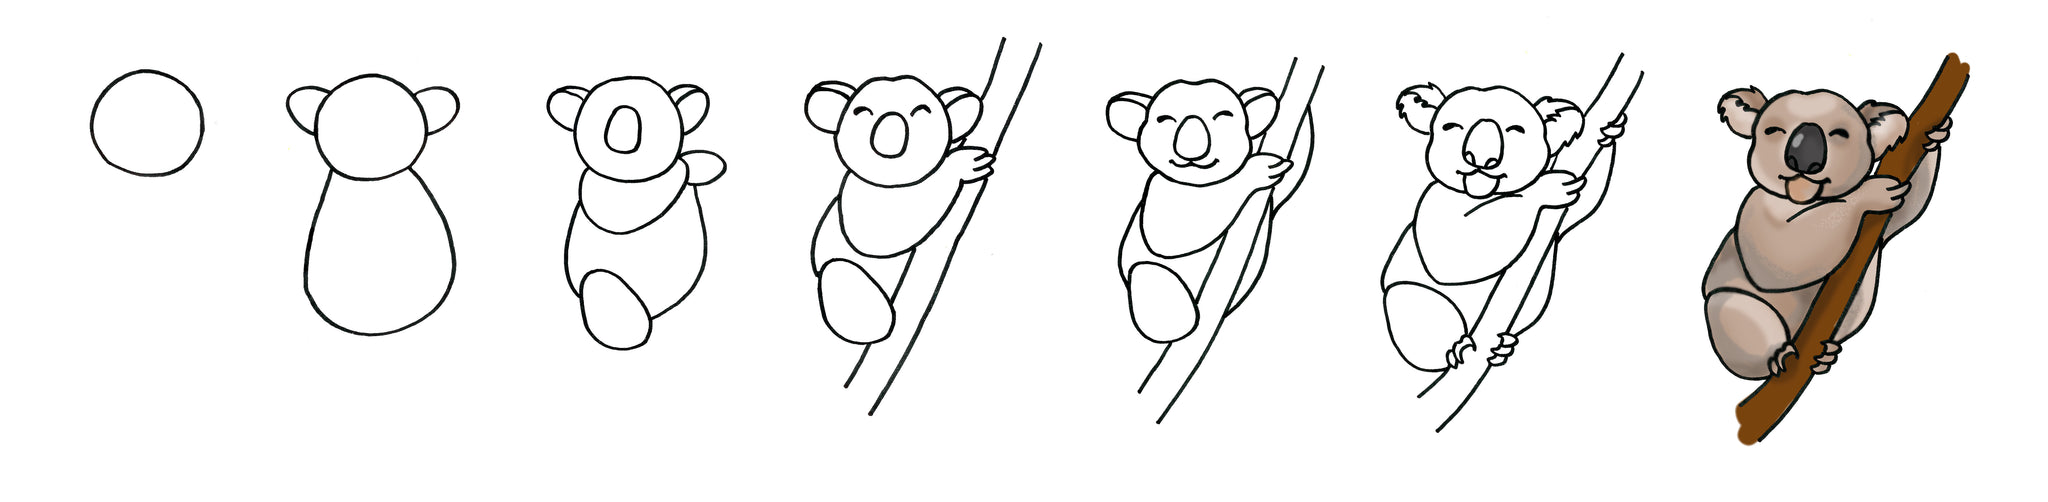 Koala Drawing - Step by Step